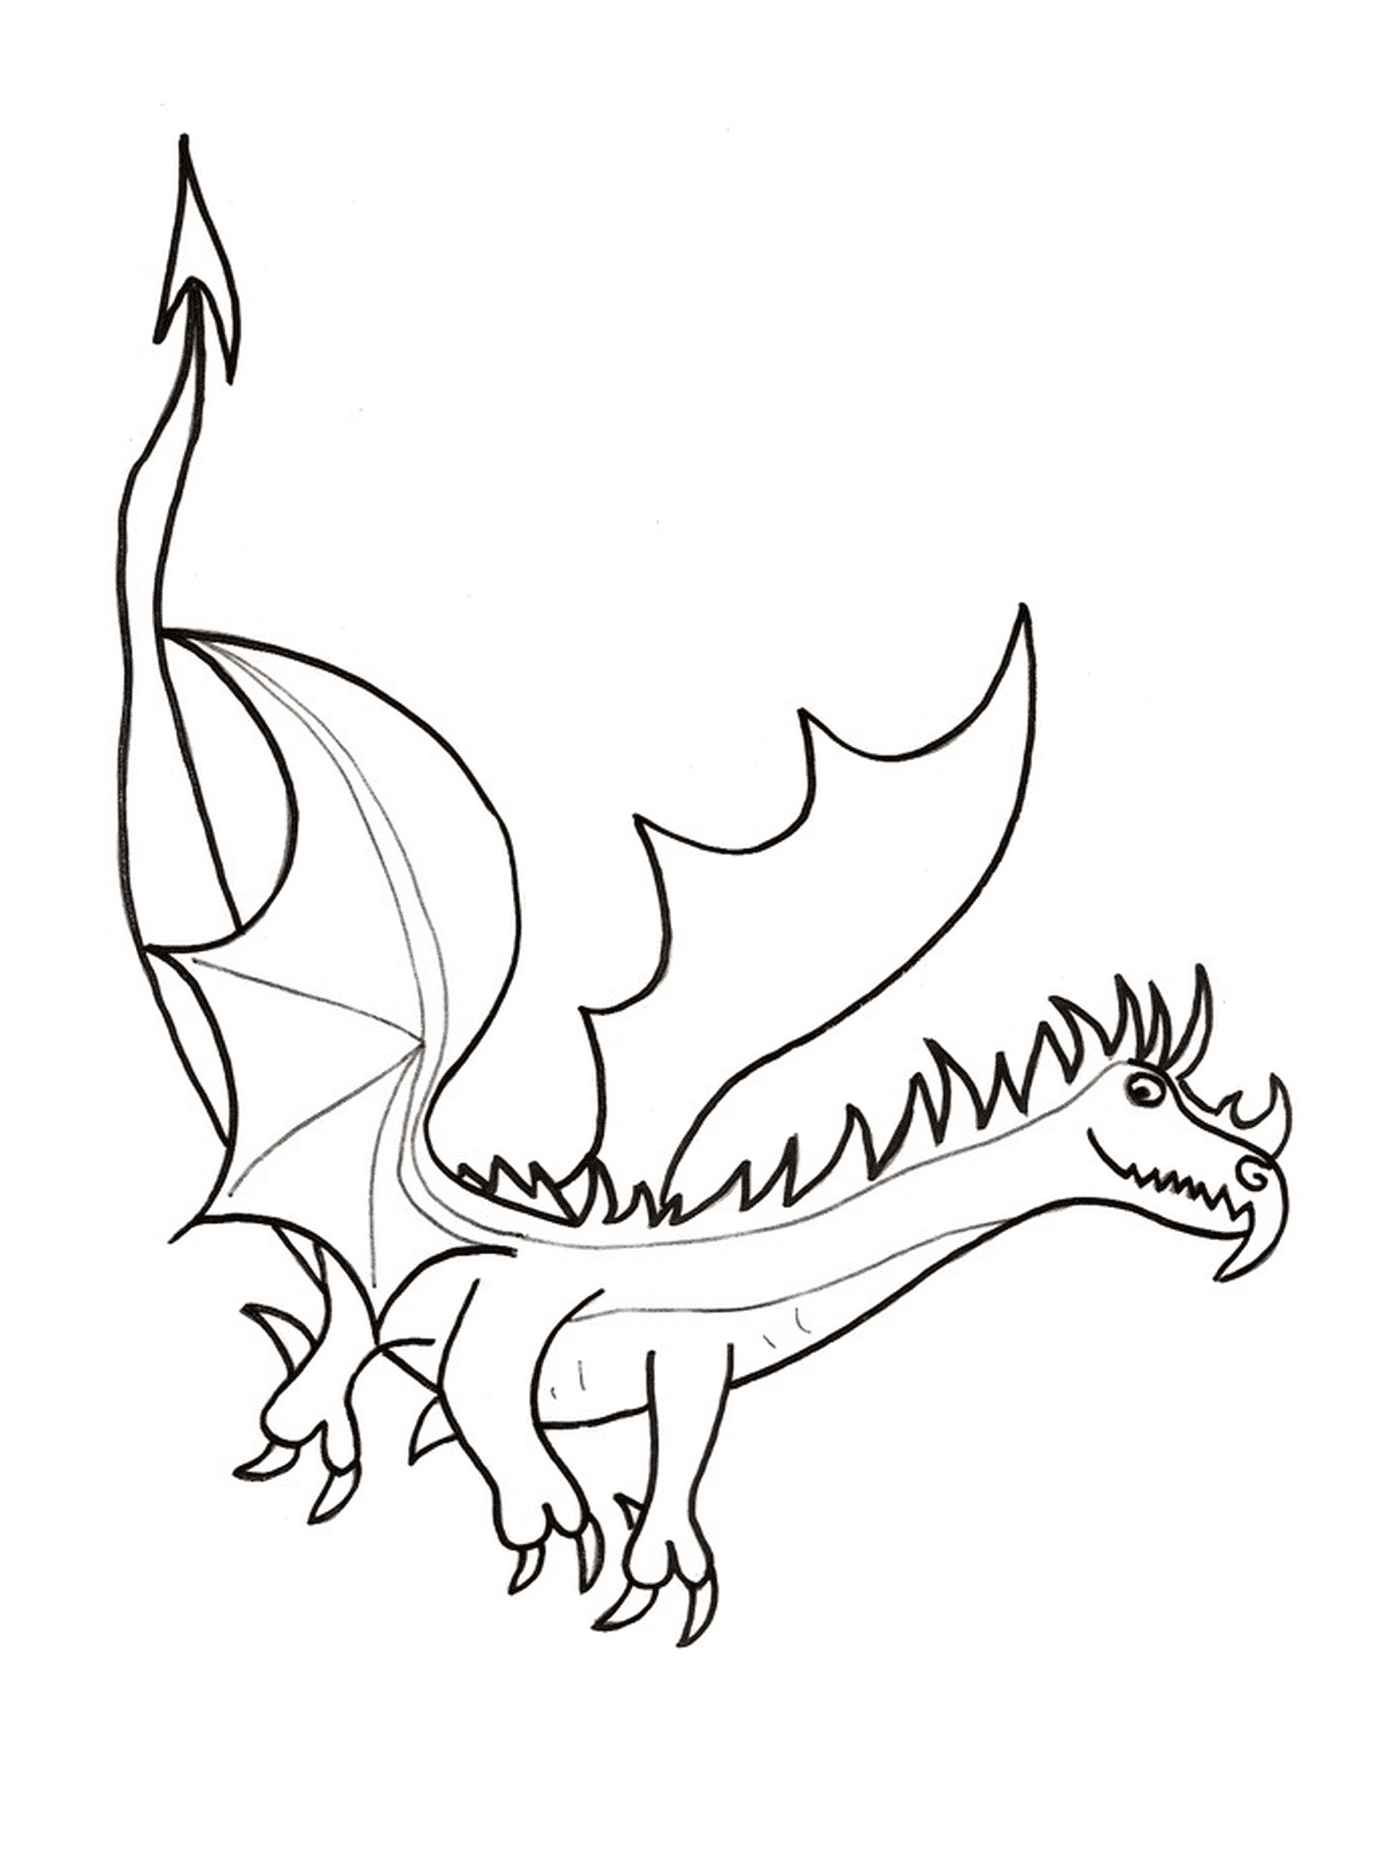  An imposing dragon 